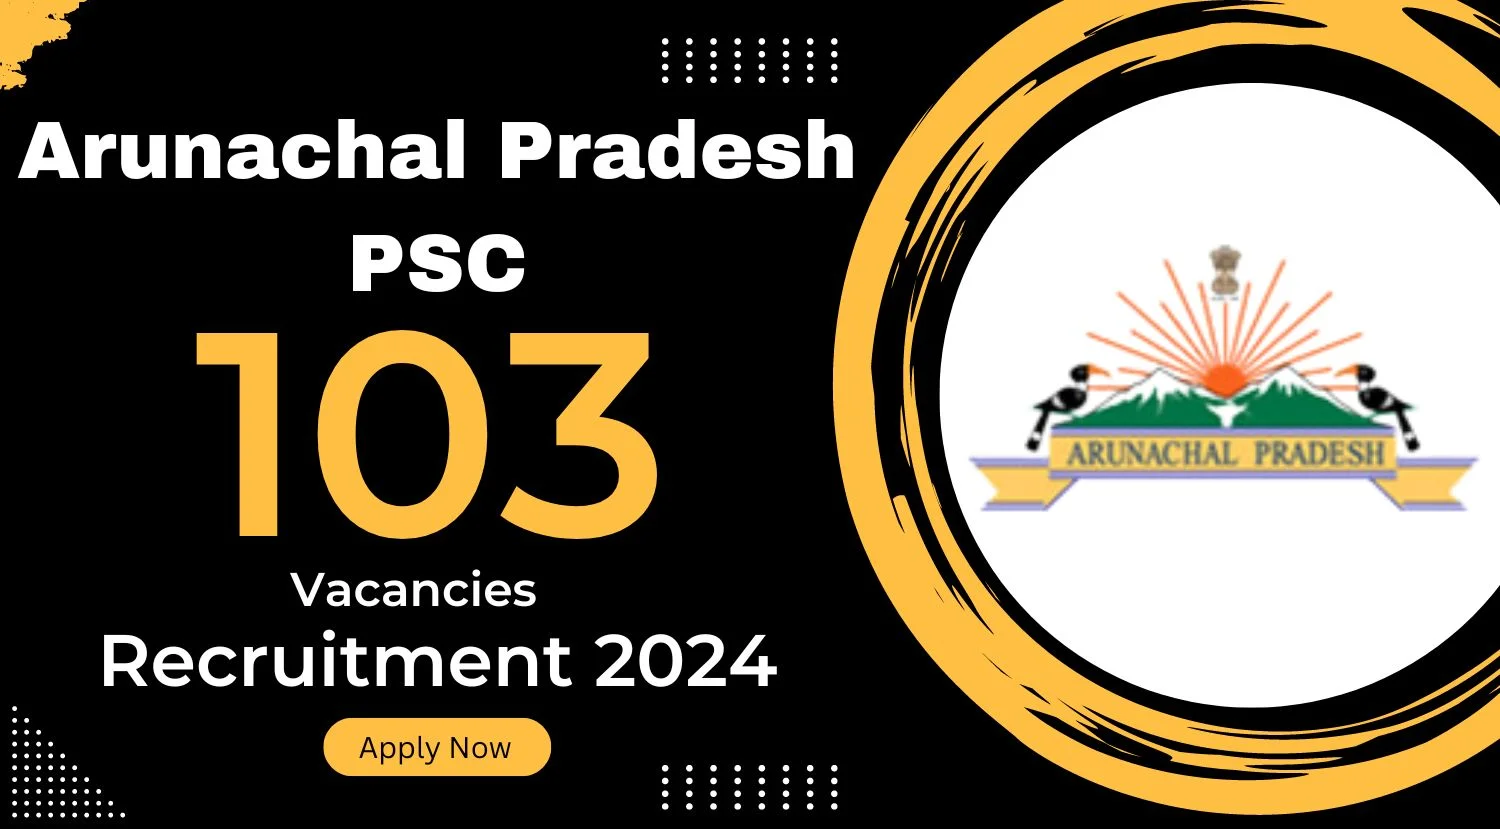 Arunachal Pradesh PSC Recruitment 2024 Notification Out for 103 Vacancies